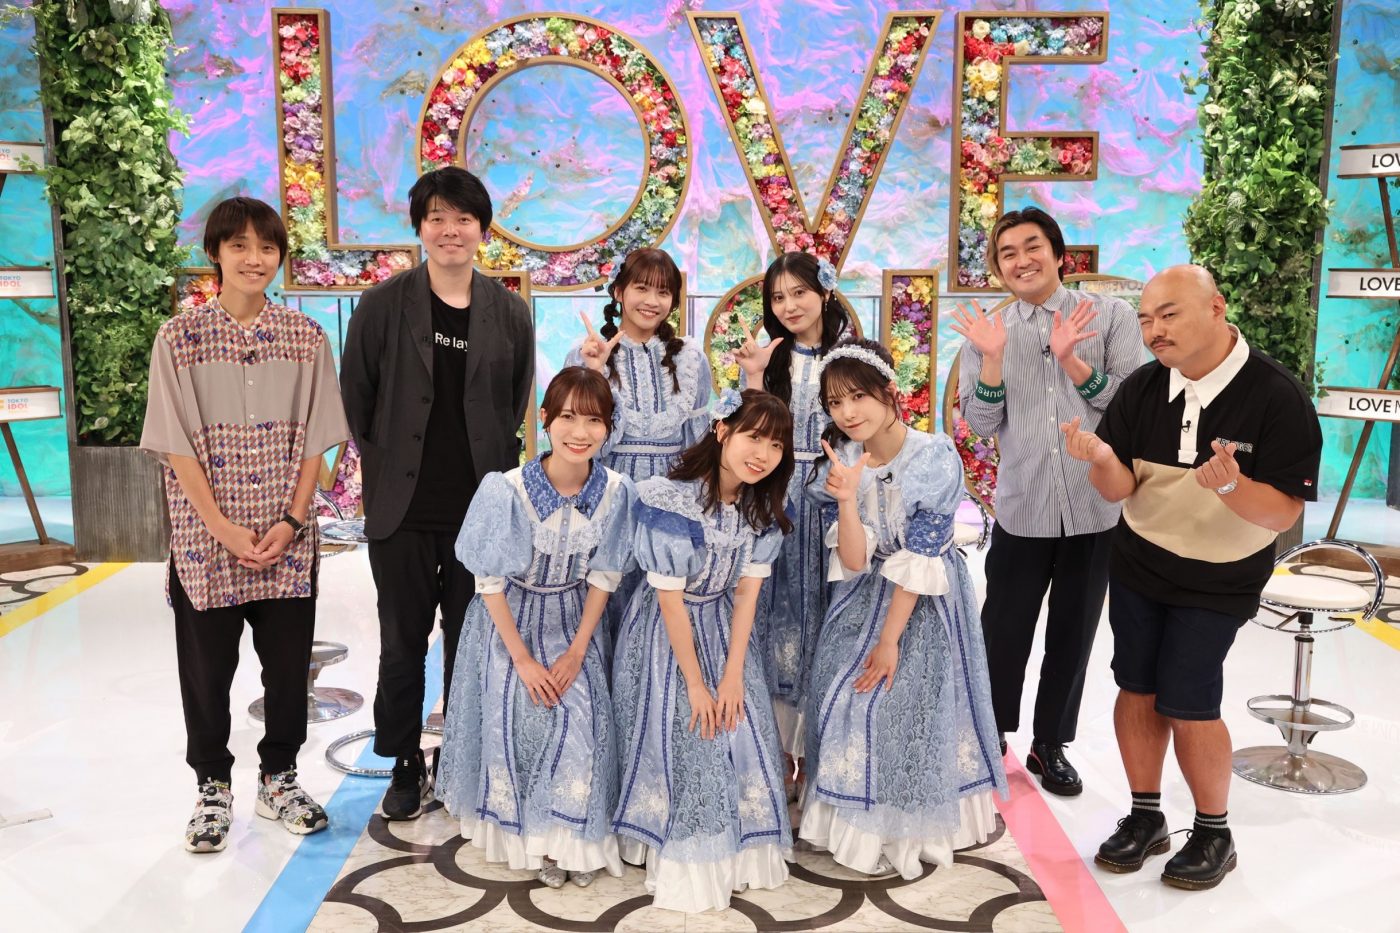 『Love music』、アイドルフェス『TOKYO IDOL FESTIVAL』特集が決定